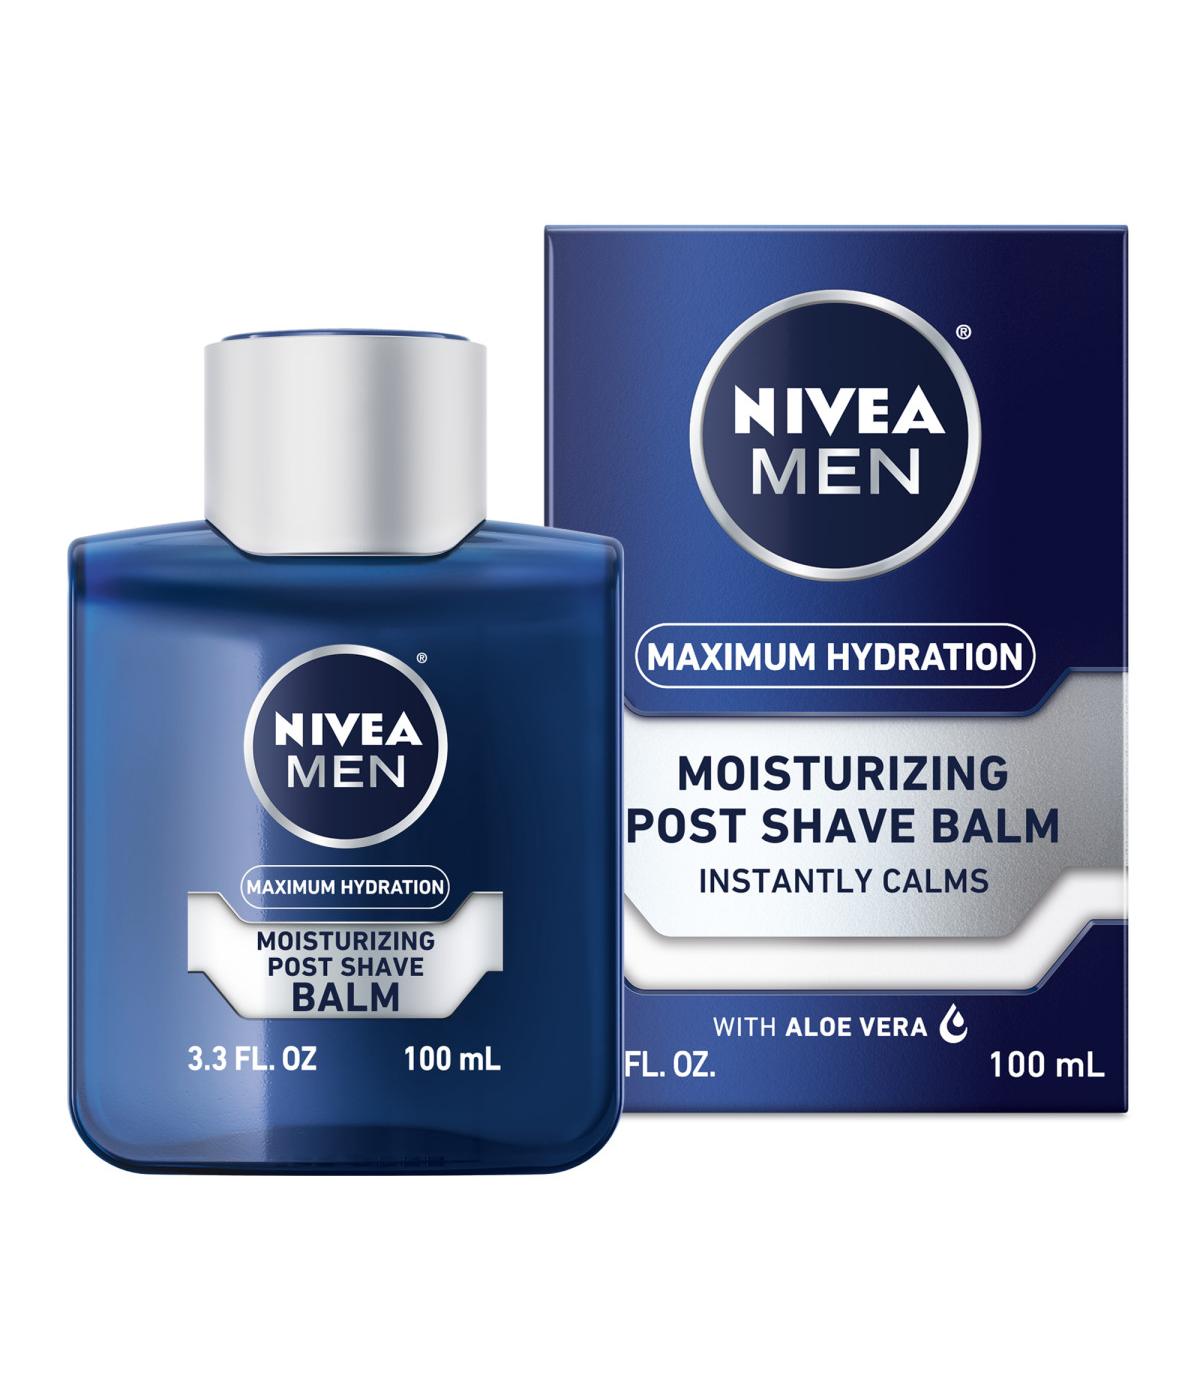 NIVEA Men Maximum Hydration Post Shave Balm; image 1 of 6